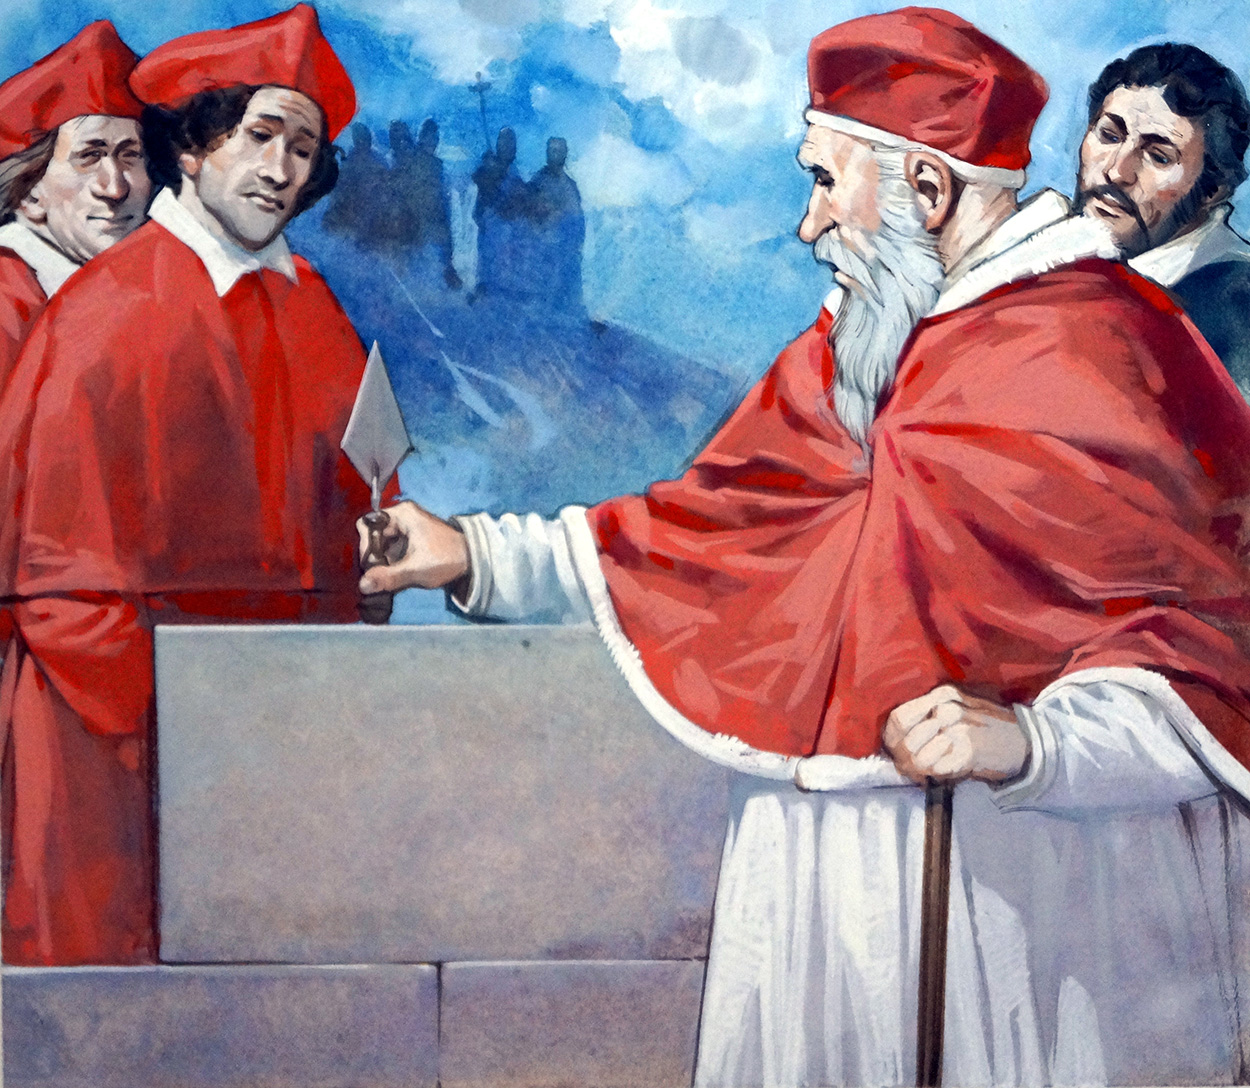 Pope Julius II (Original) art by Angus McBride at The Illustration Art Gallery